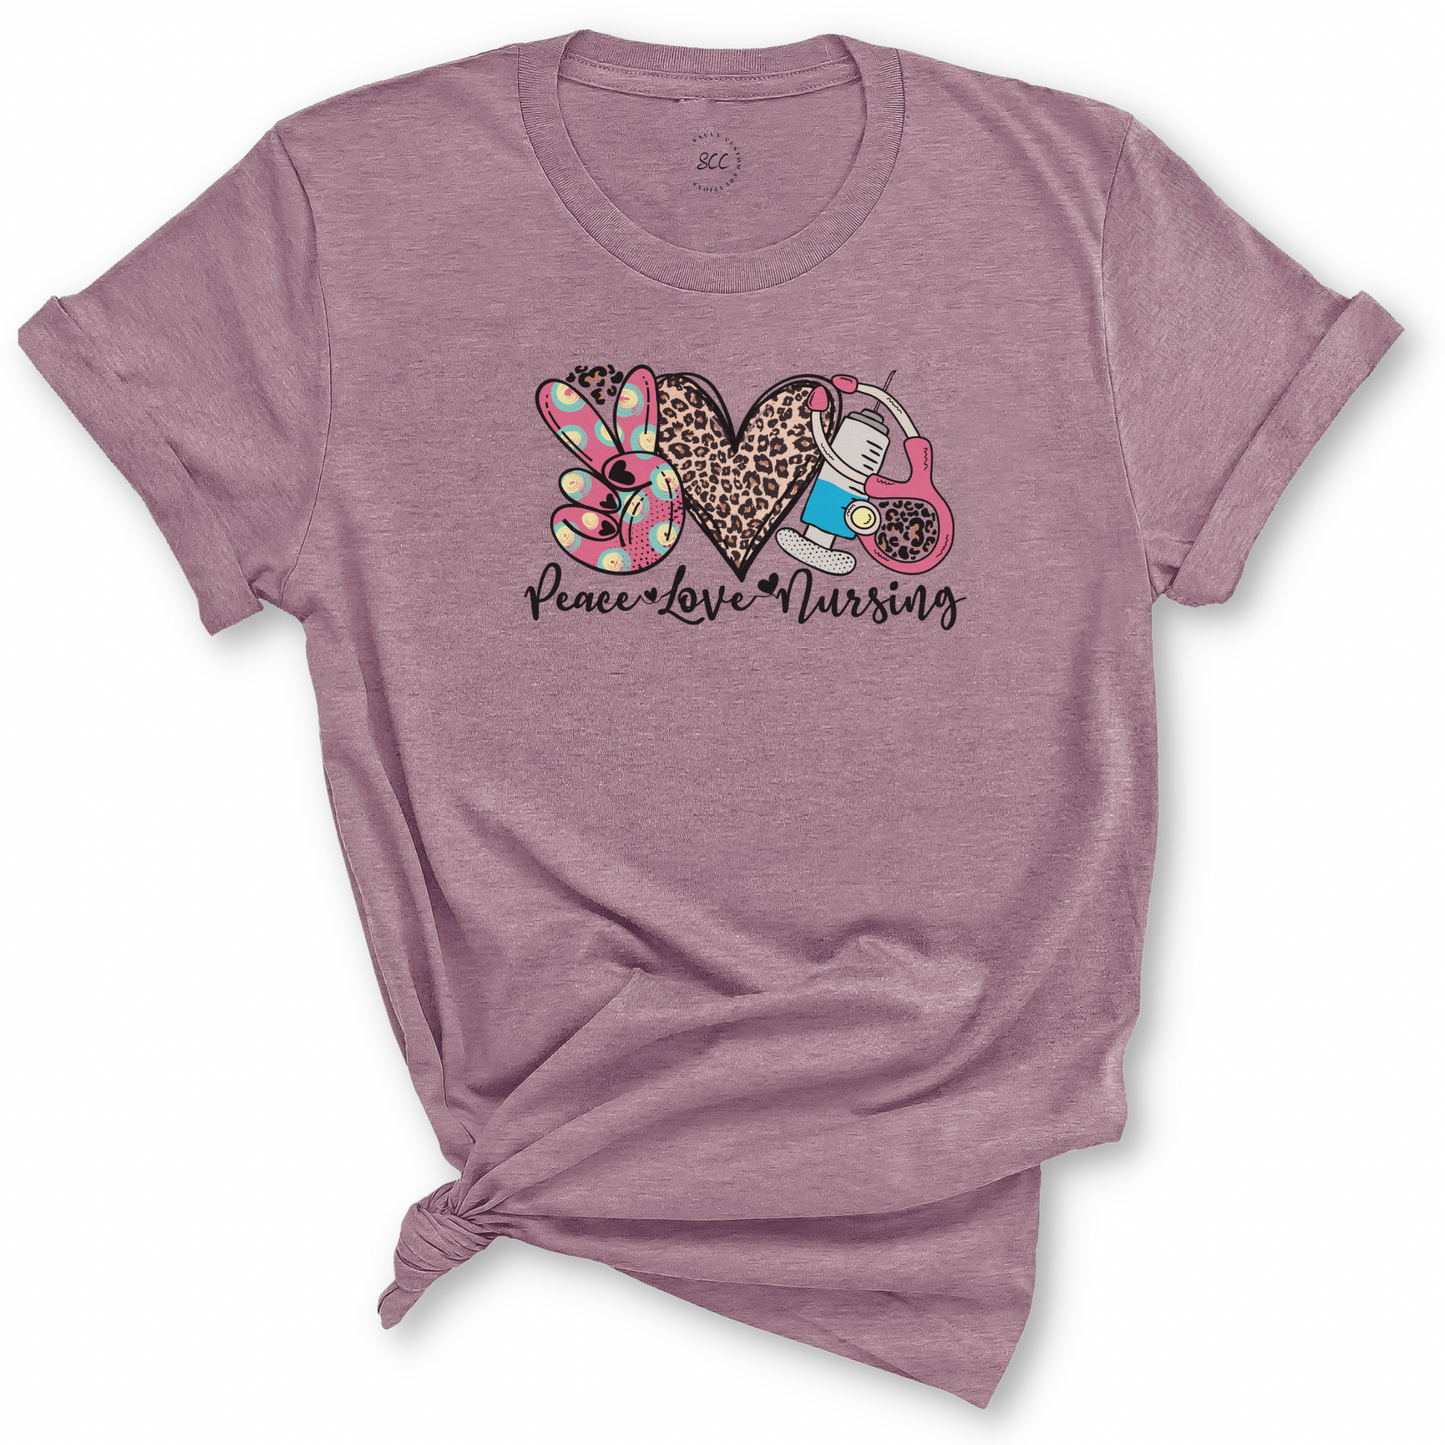 PEACE LOVE NURSING - Unisex T-Shirt